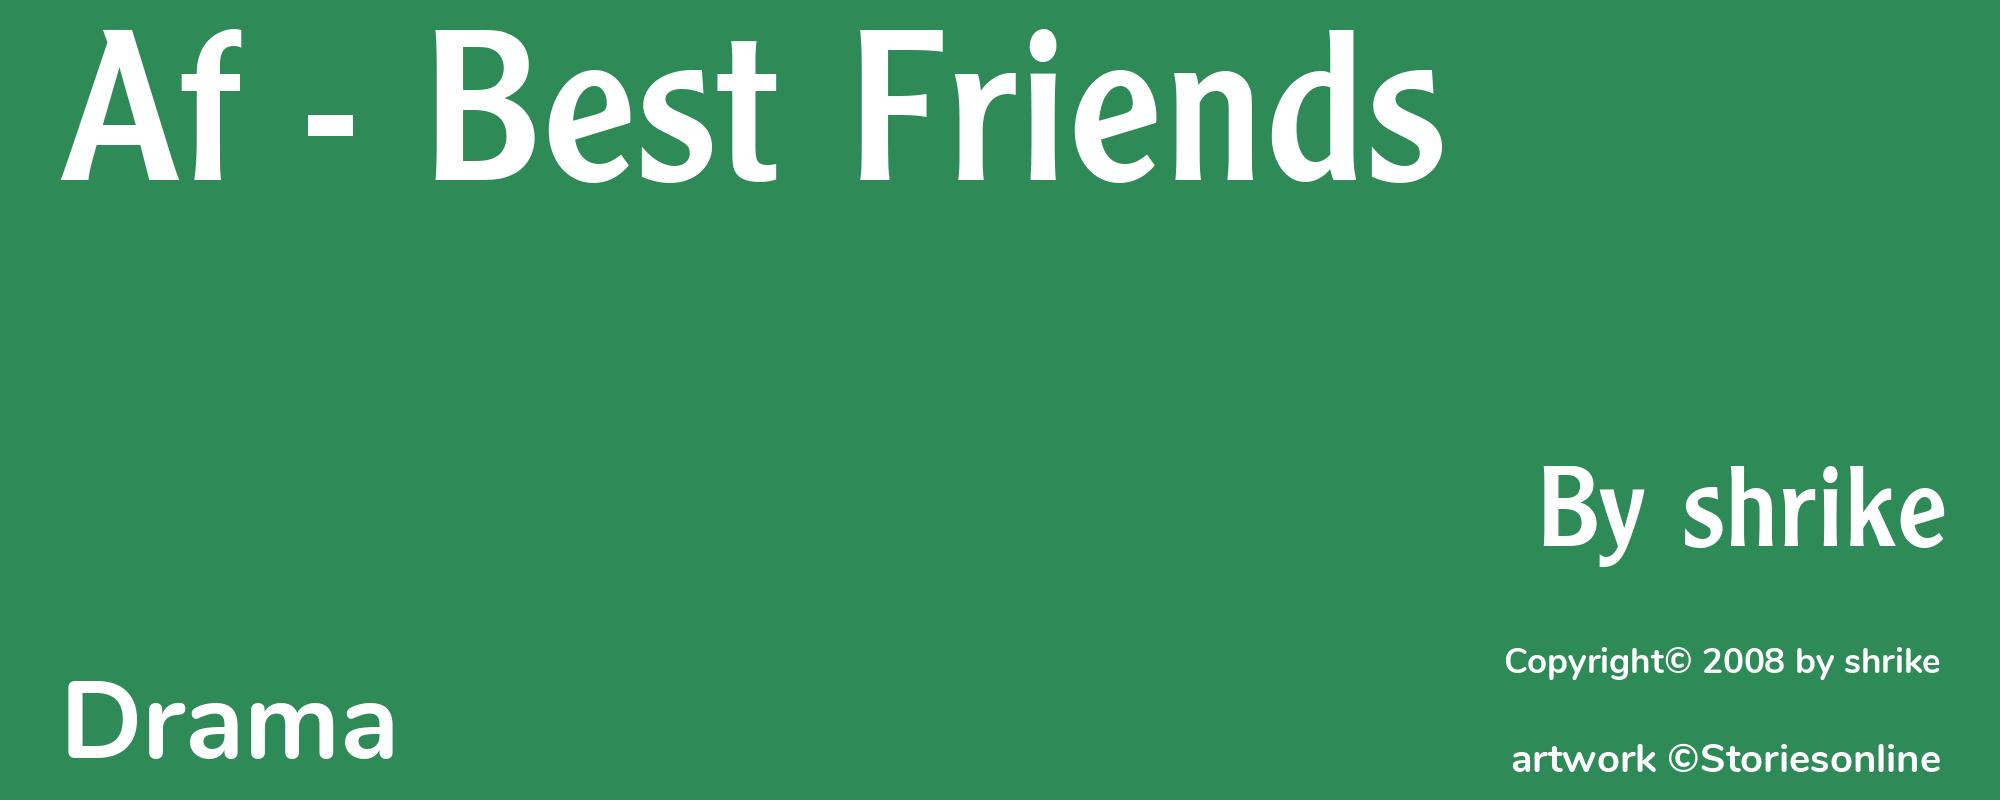 Af - Best Friends - Cover